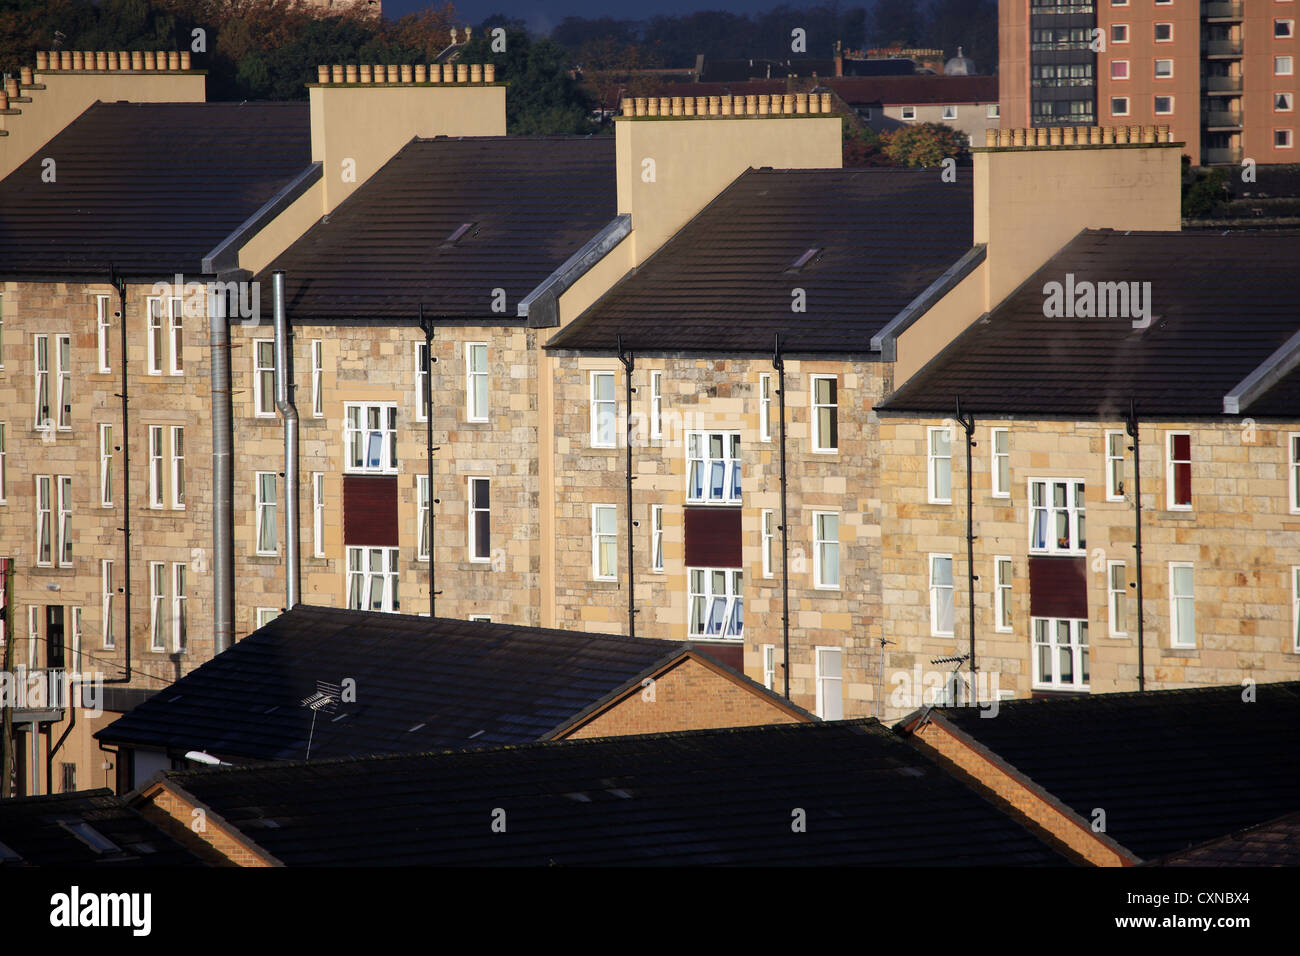 Tenement sandstone buildings in Paisley, Scotland Stock Photo